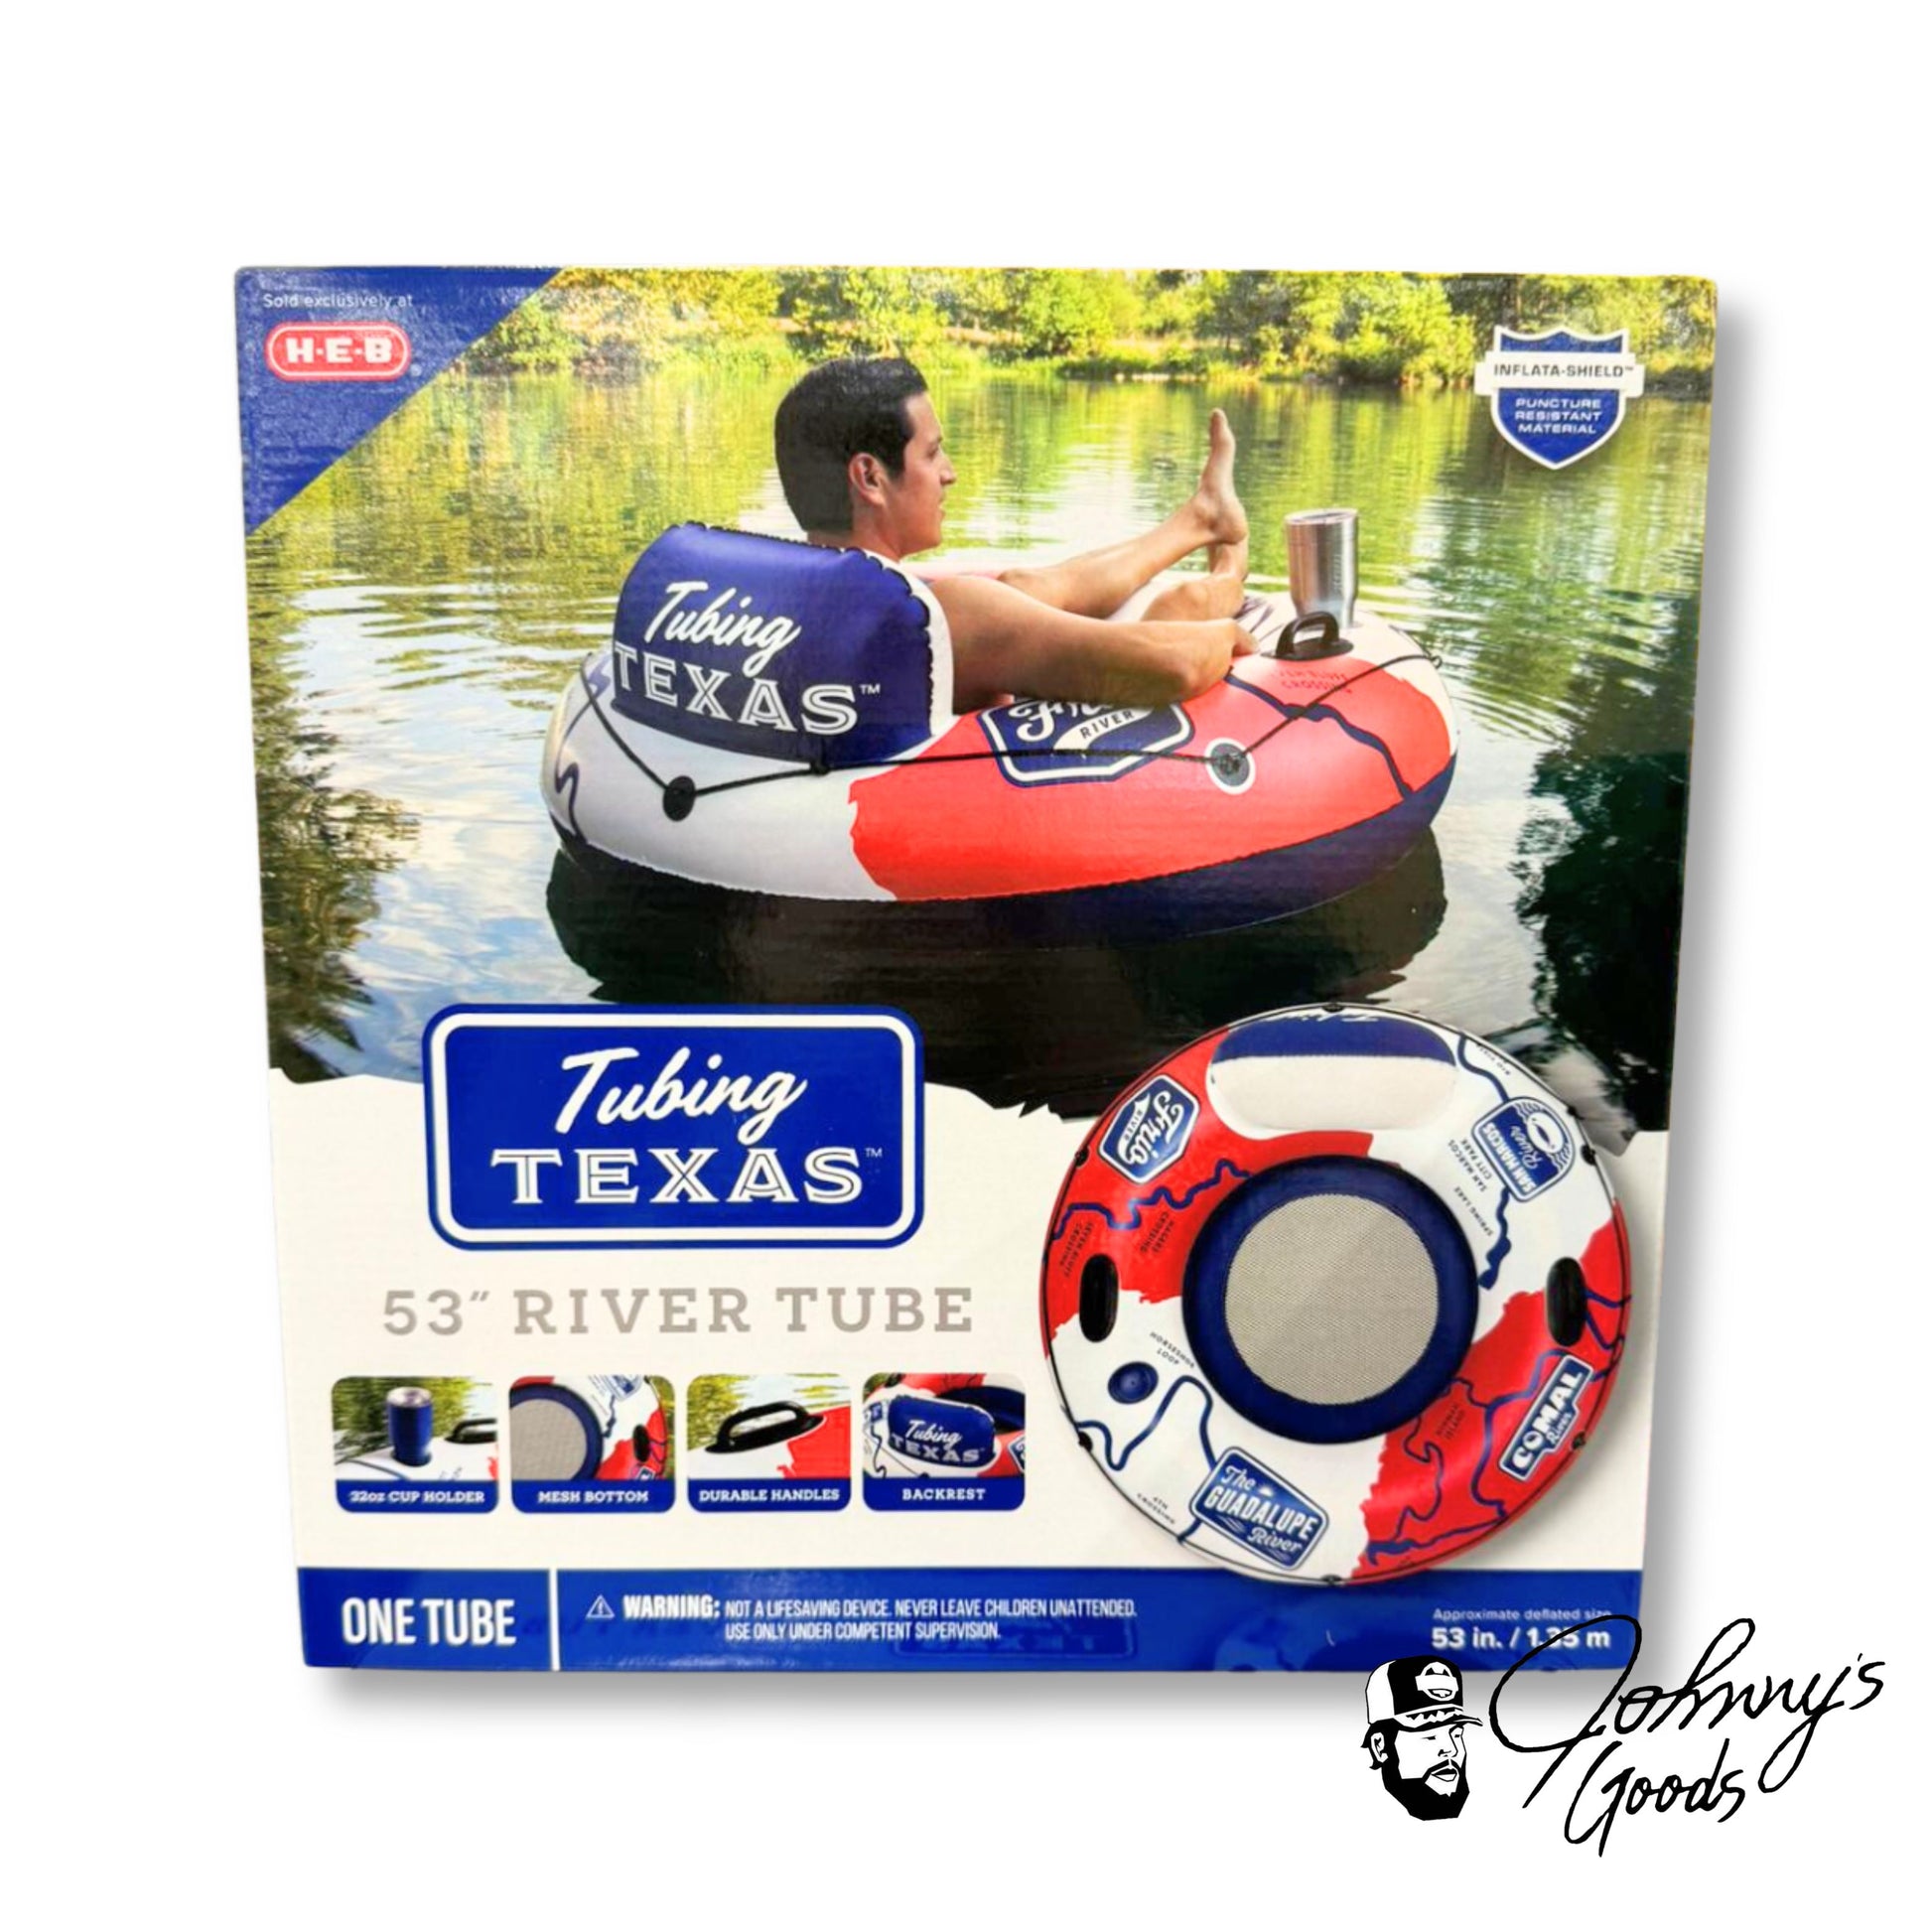 H‑E‑B Tubing Texas Inflatable River Tube HEB texas summer